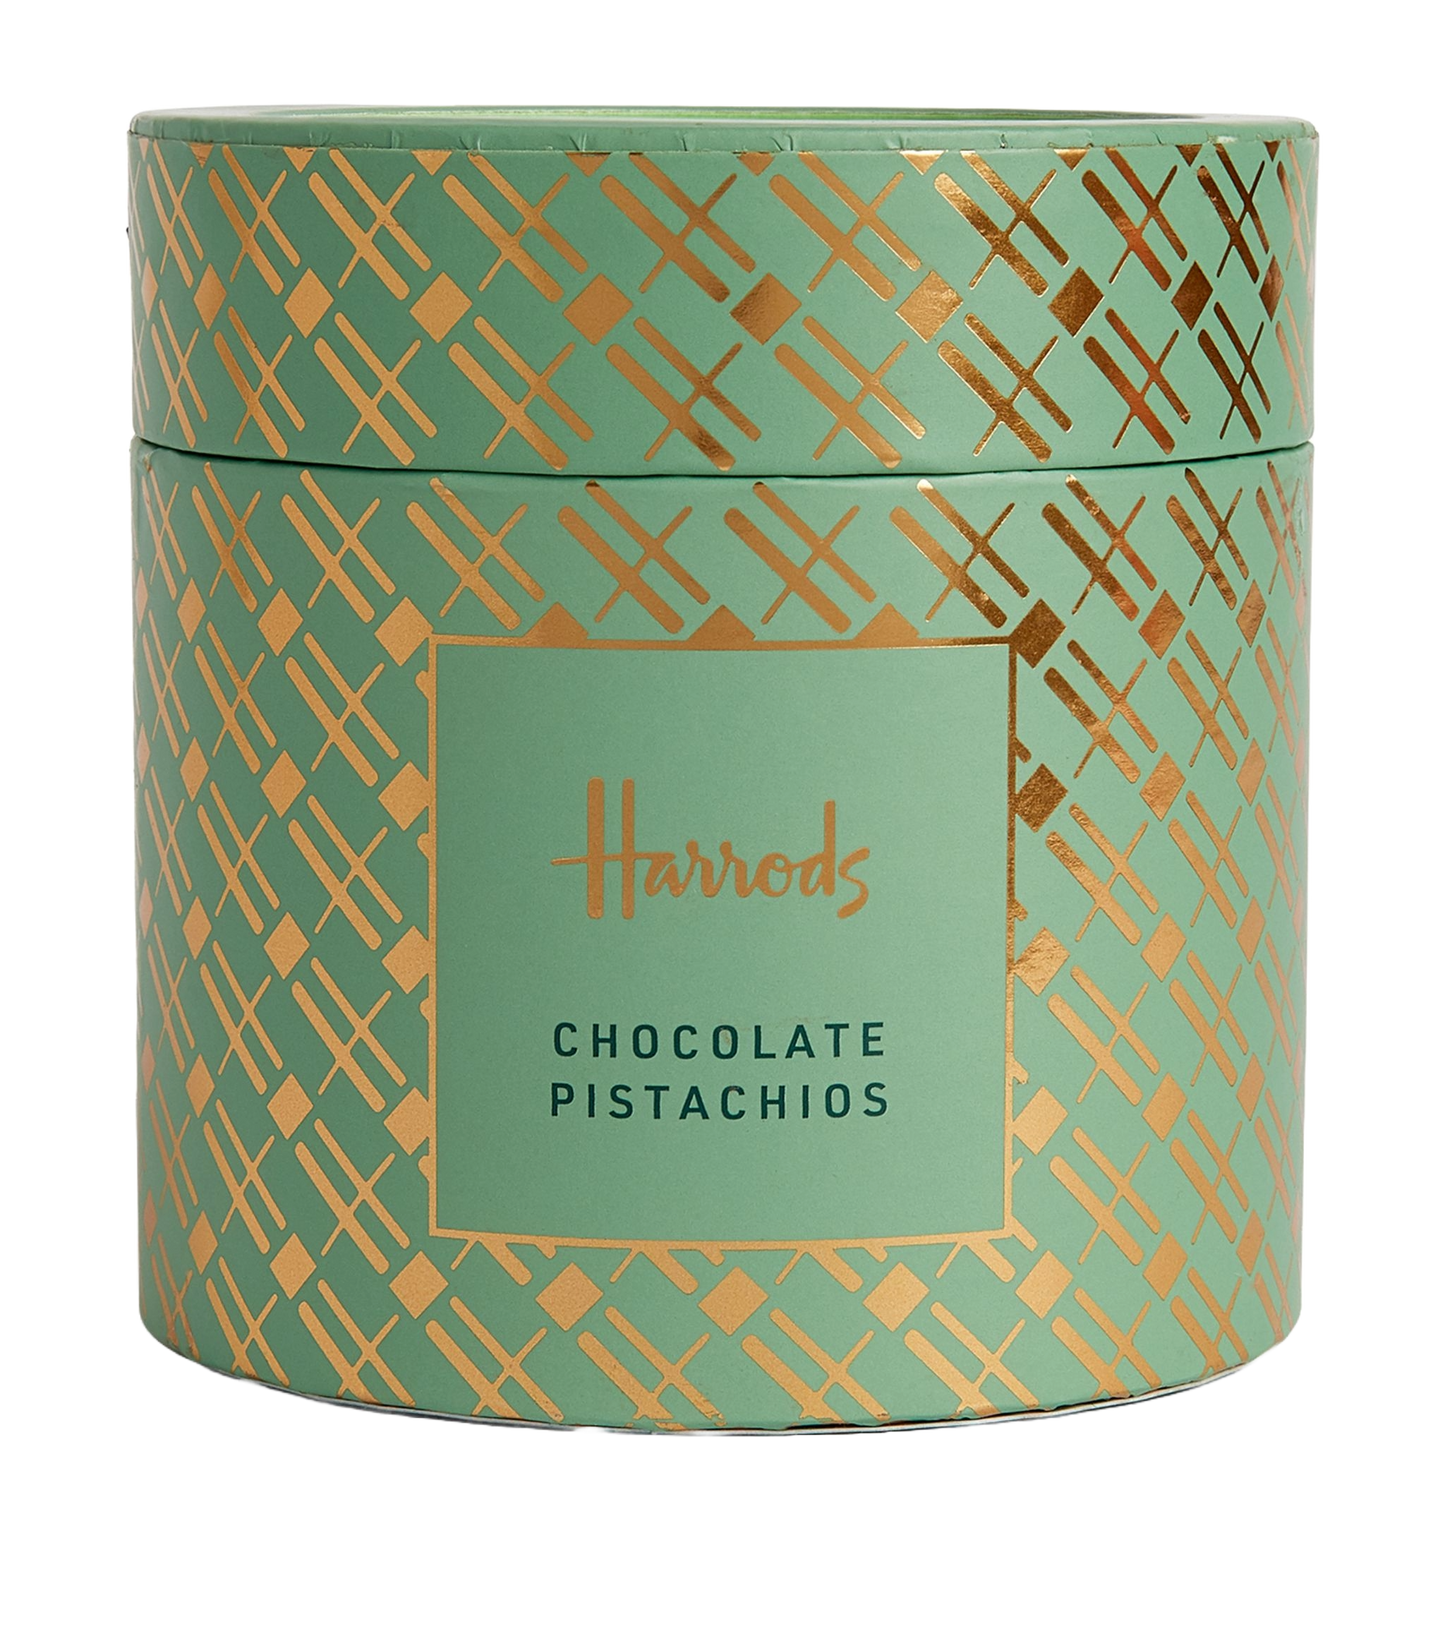 HARRODS  Chocolate Pistachios (325g)